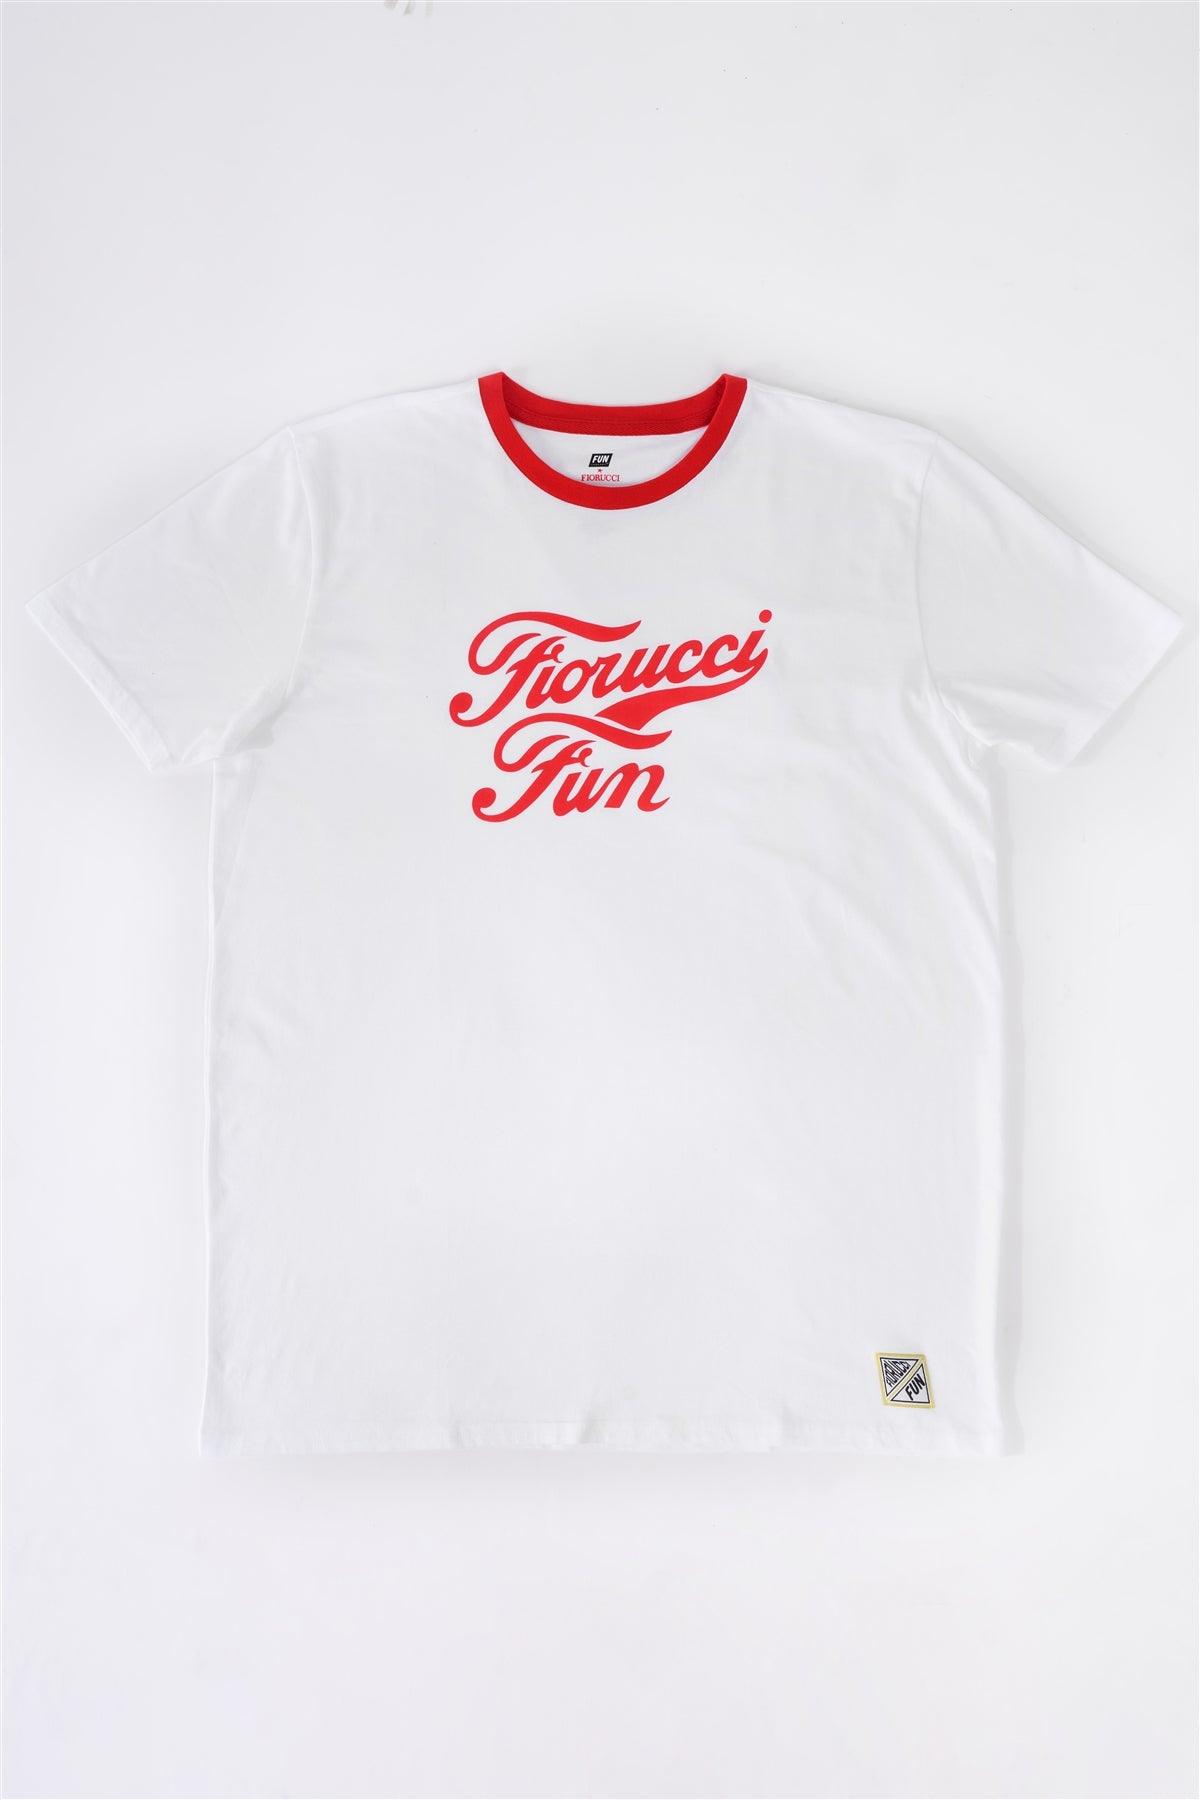 Fiorucci Fun Men's White & Red Printed Logo T-Shirt For Him /2-1-1